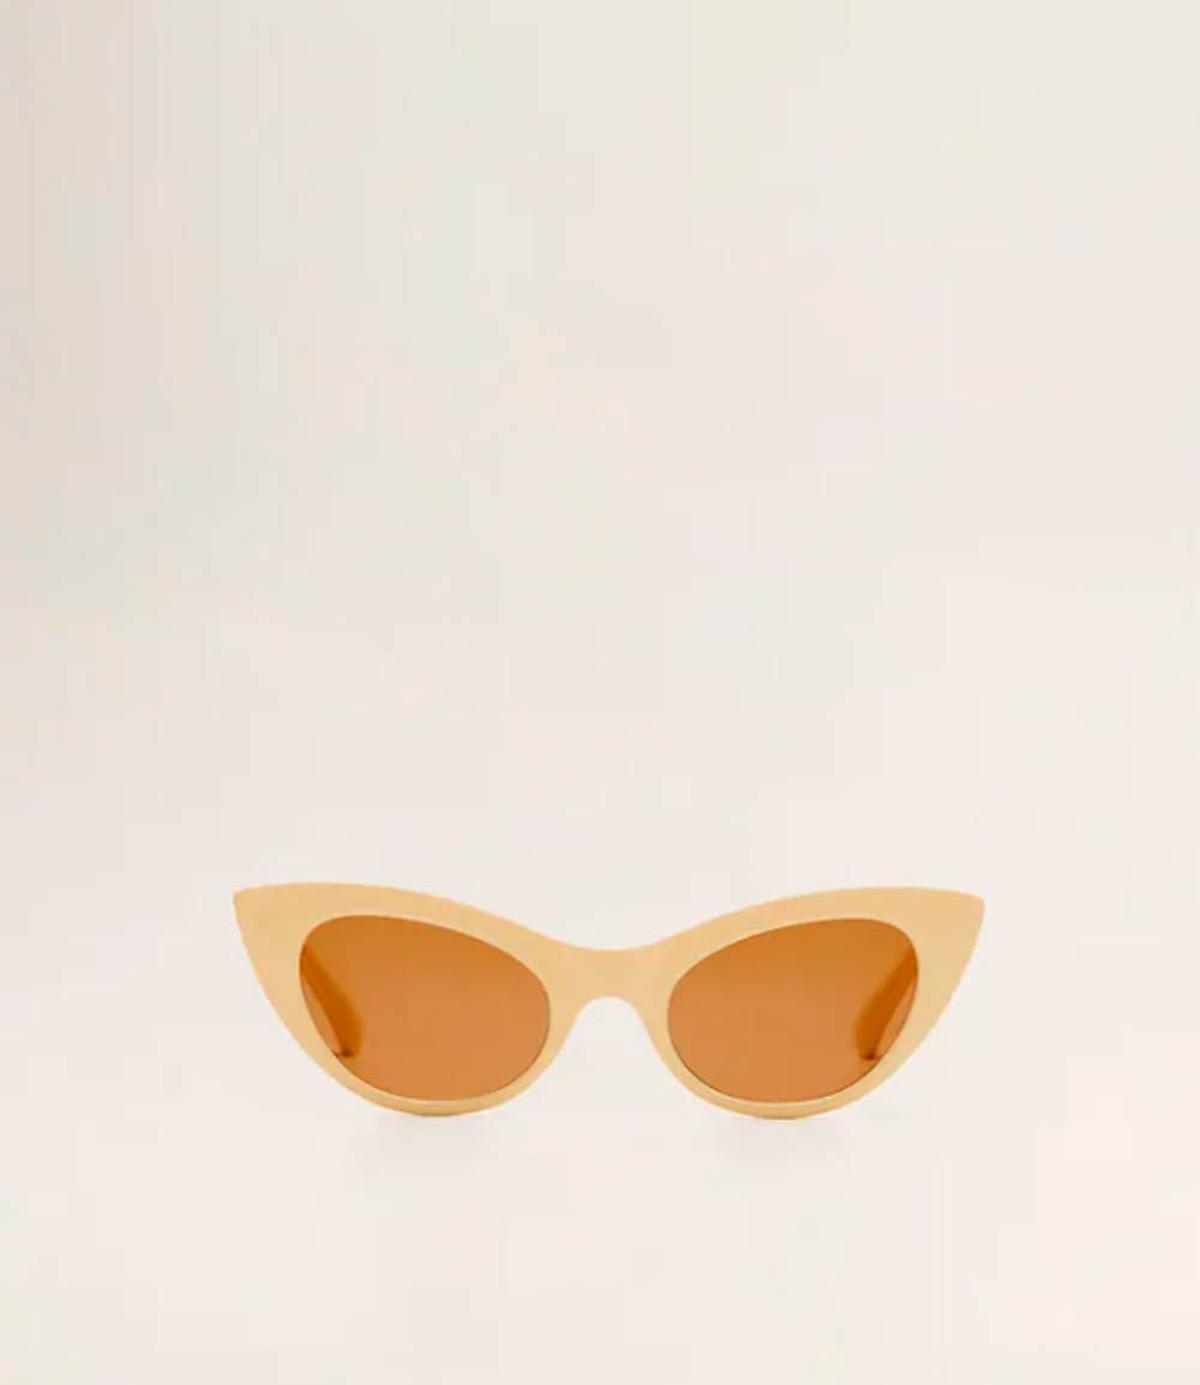 Gafas de sol 'cat eyes' de Mango Outlet. (Precio: 9,99 euros)